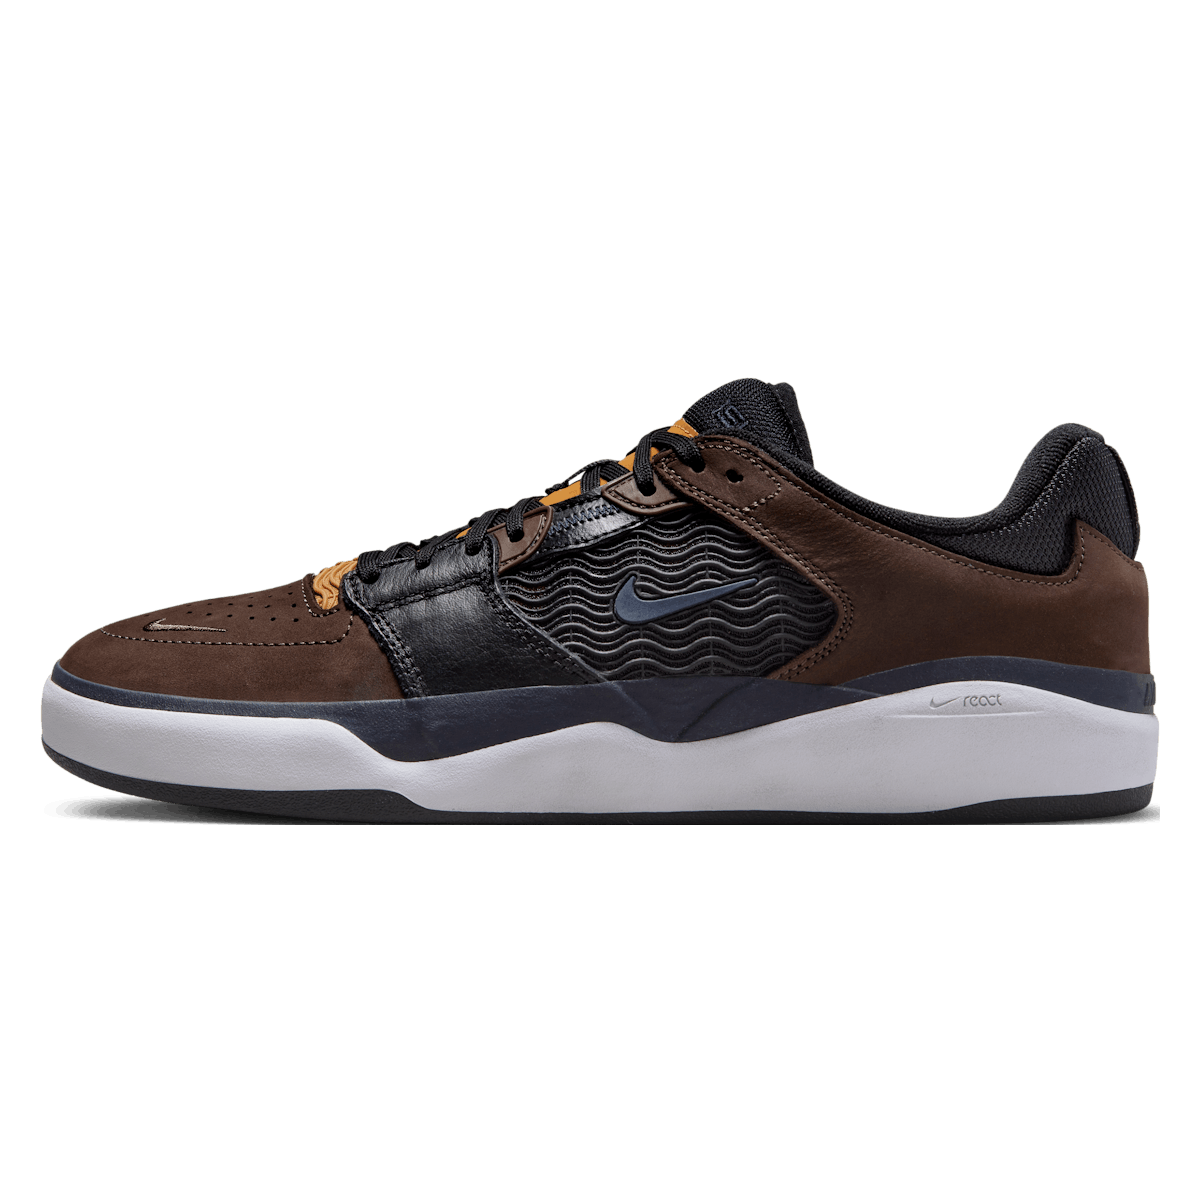 Nike SB Ishod Premium "Baroque Brown"